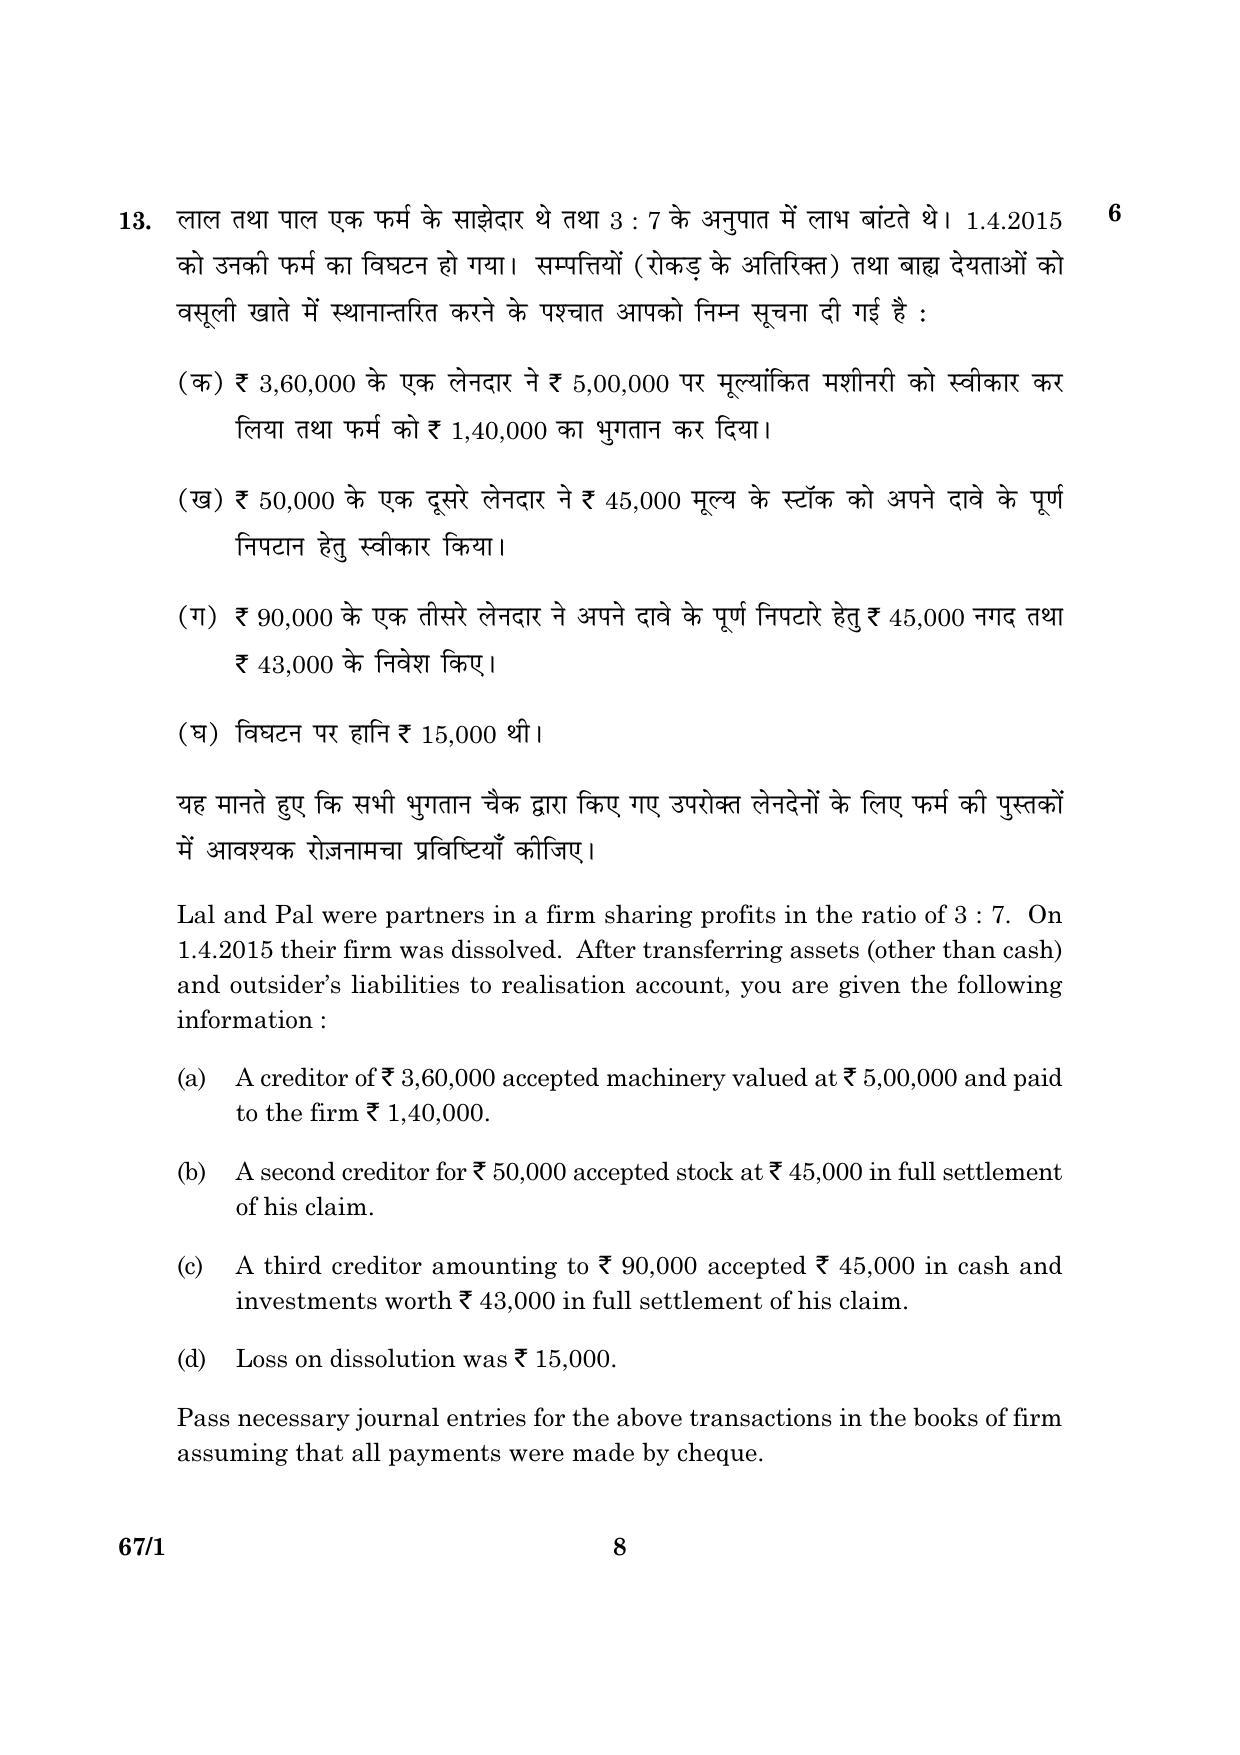 CBSE Class 12 067 Set 1 Accountancy 2016 Question Paper - Page 8